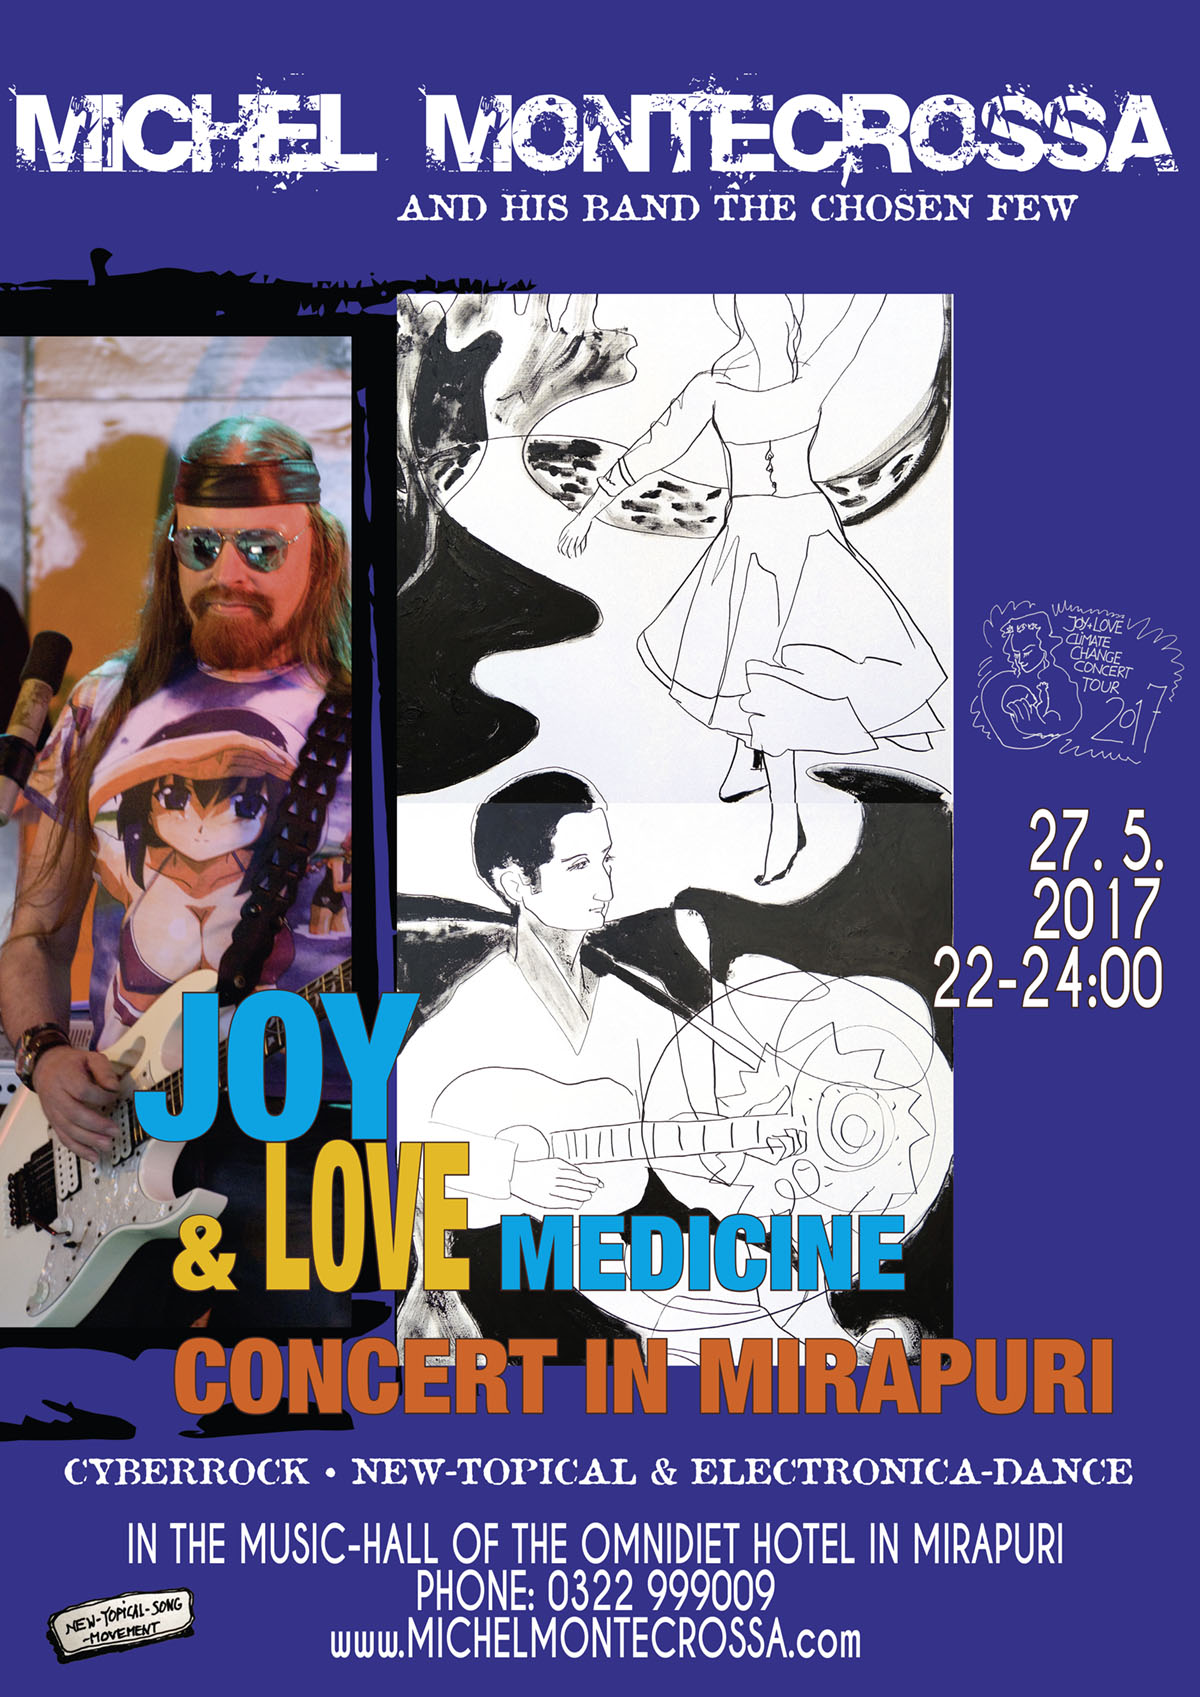 Joy & Love Medicine Concert